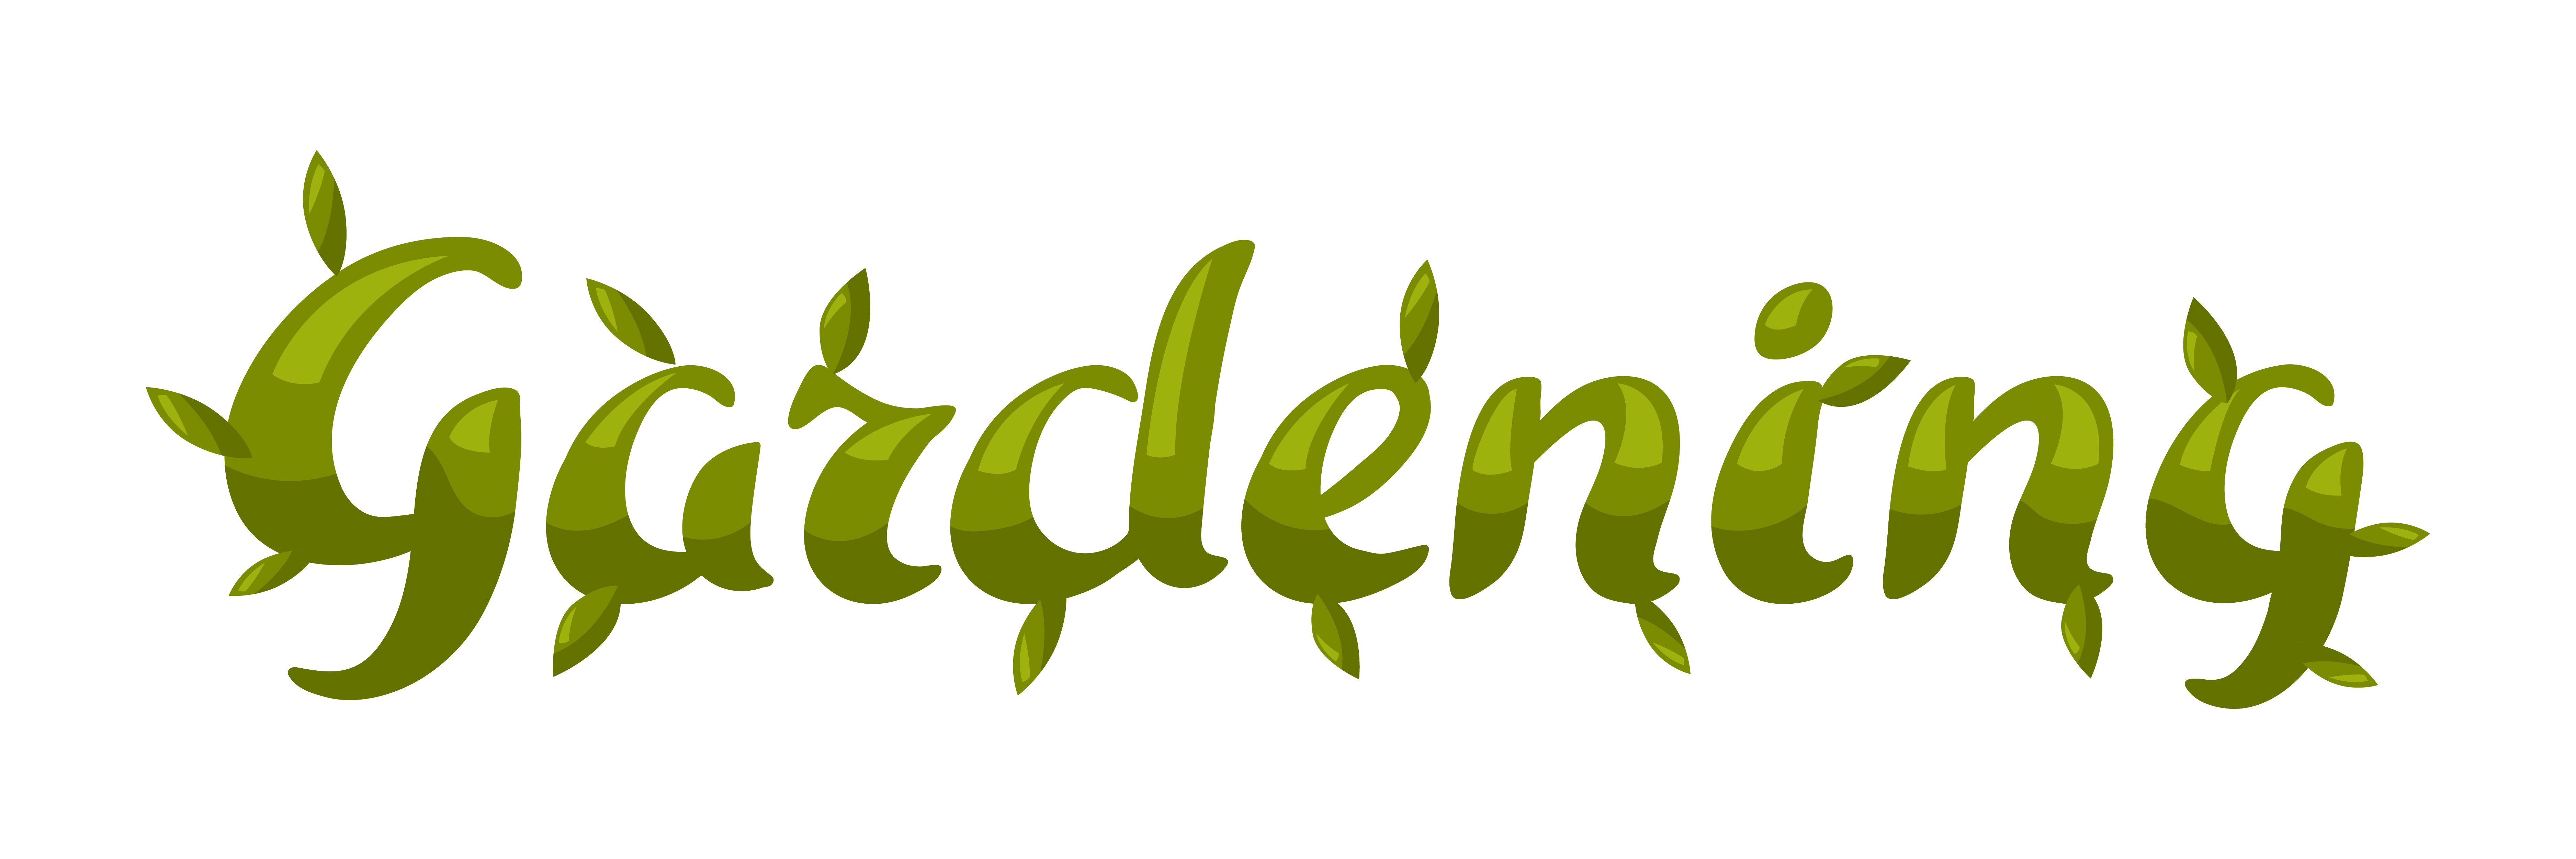 Gardening word lettering. Decorative lettering for prints and designs.. Gardening word lettering.